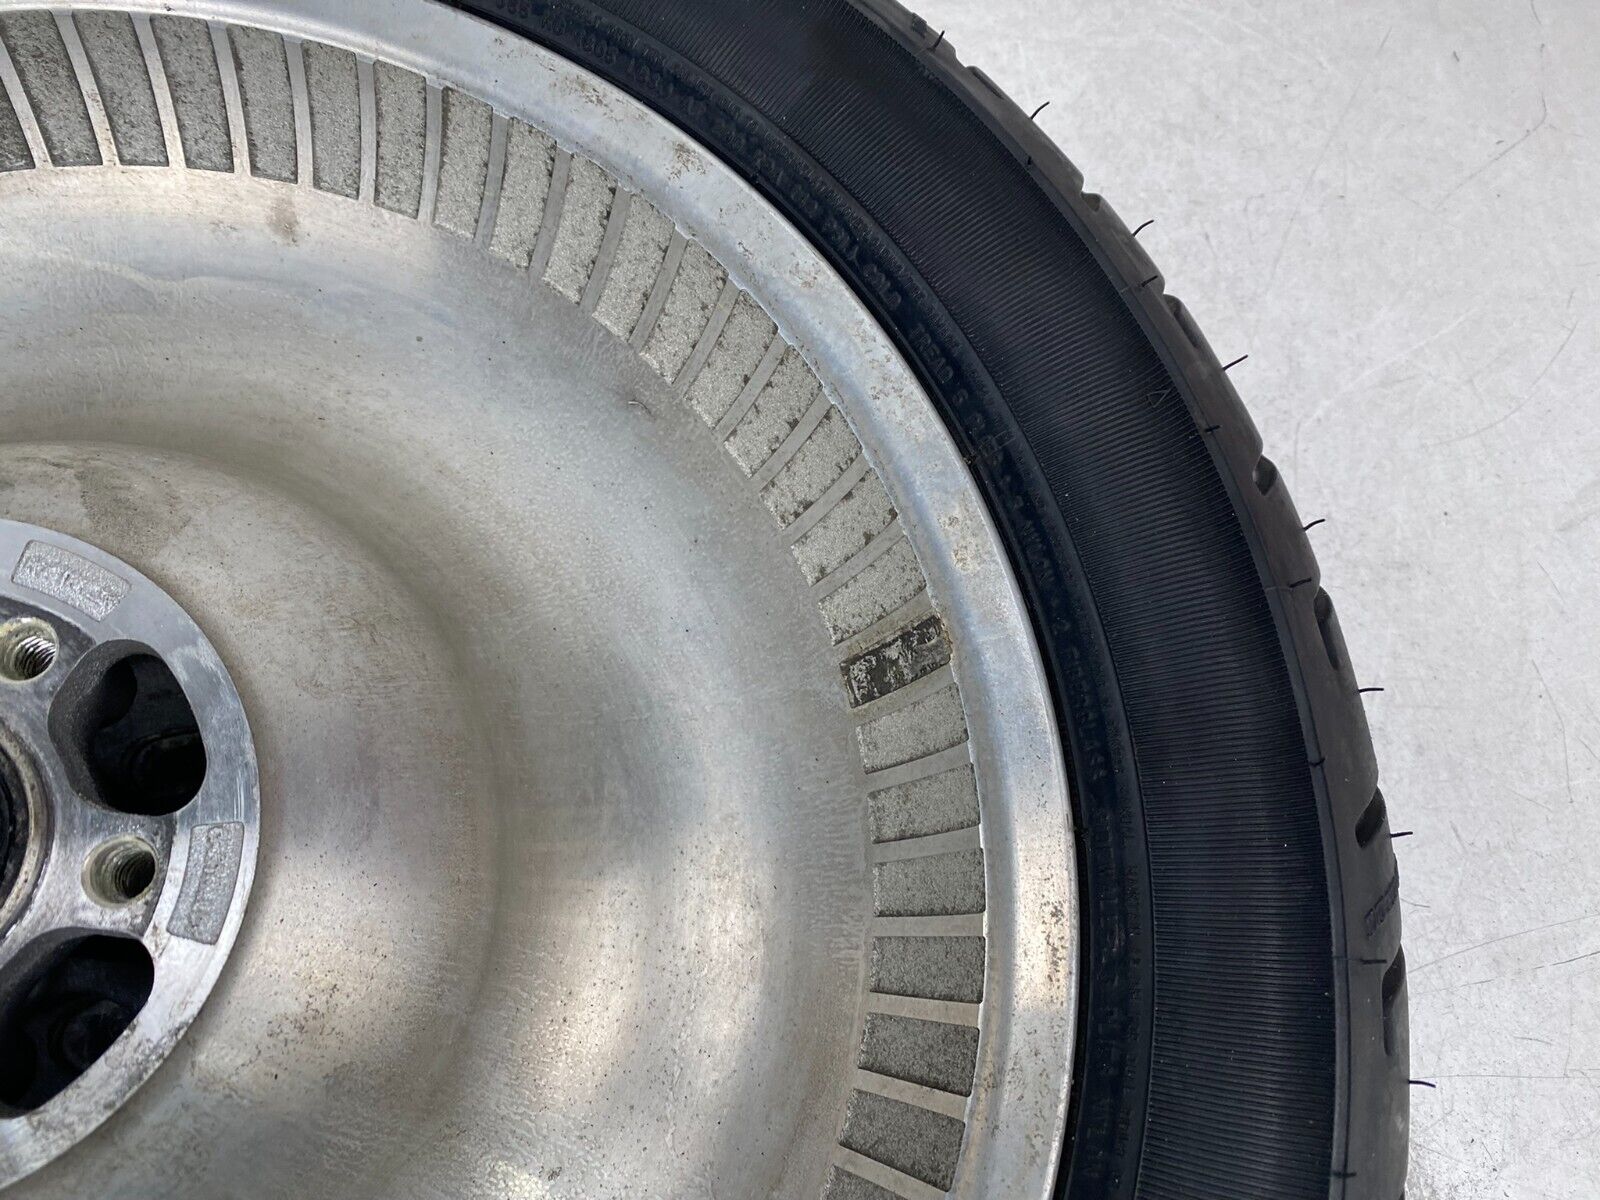 2001 HARLEY DAVIDSON SOFTAIL Deuce Rear Wheel Rim Tire 41074-00 17"